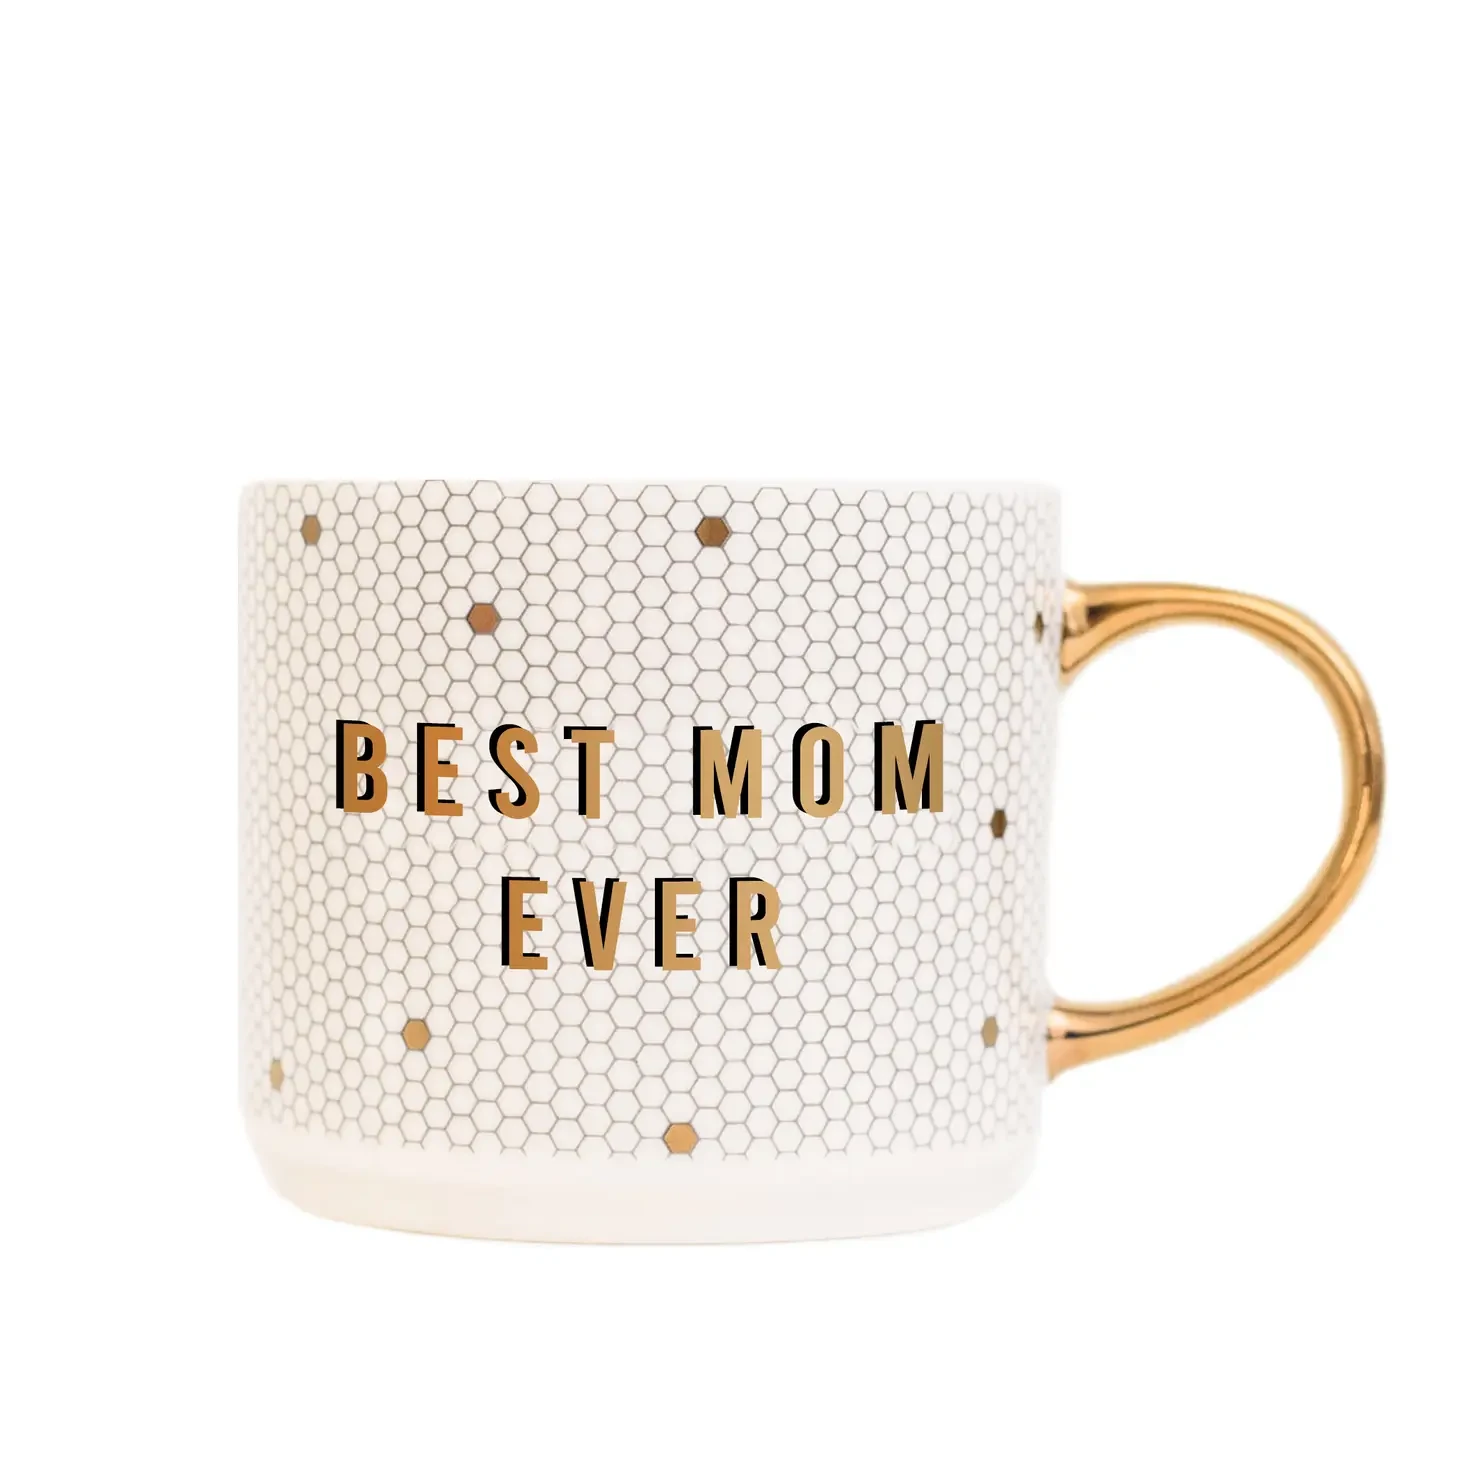 Best Mom Ever - Gold, White Honeycomb Tile Coffee Mug